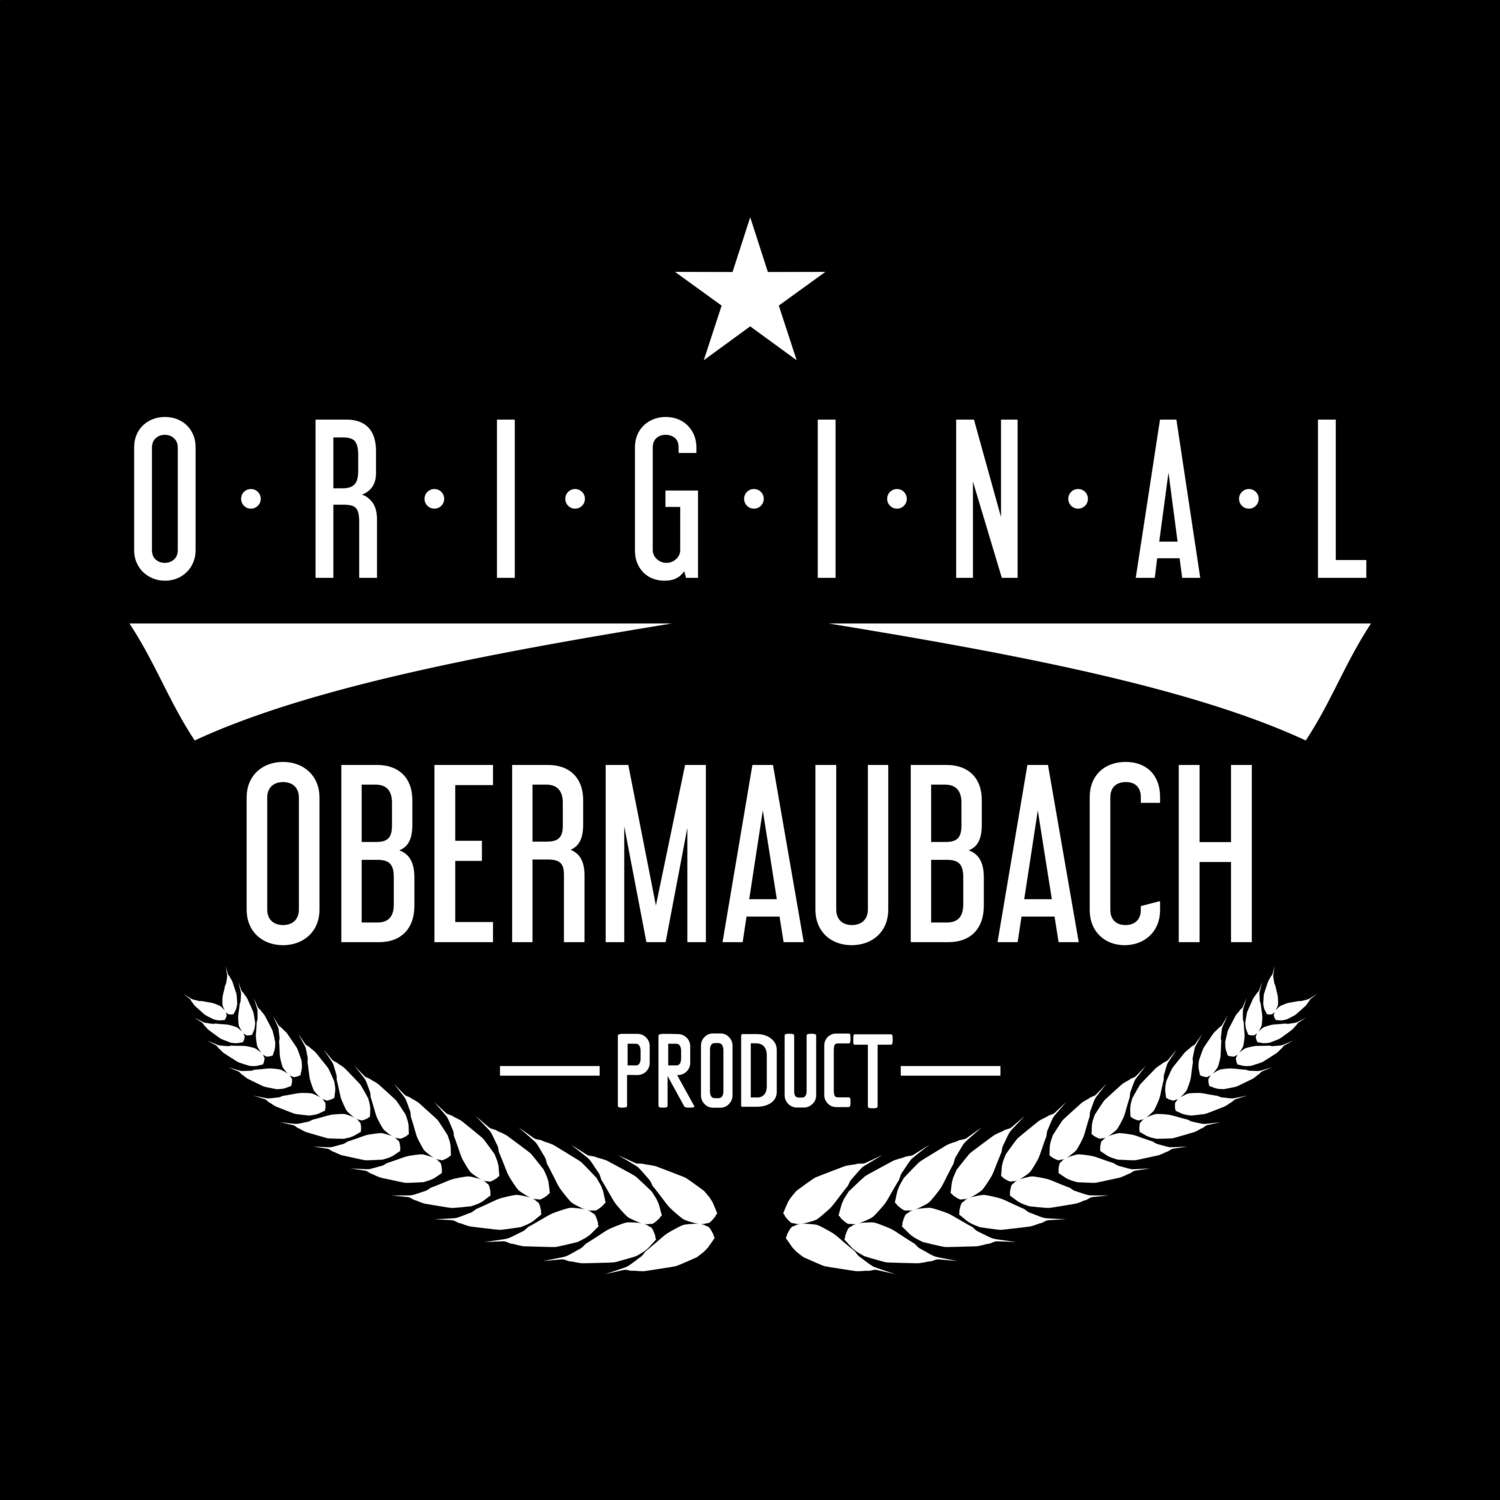 Obermaubach T-Shirt »Original Product«